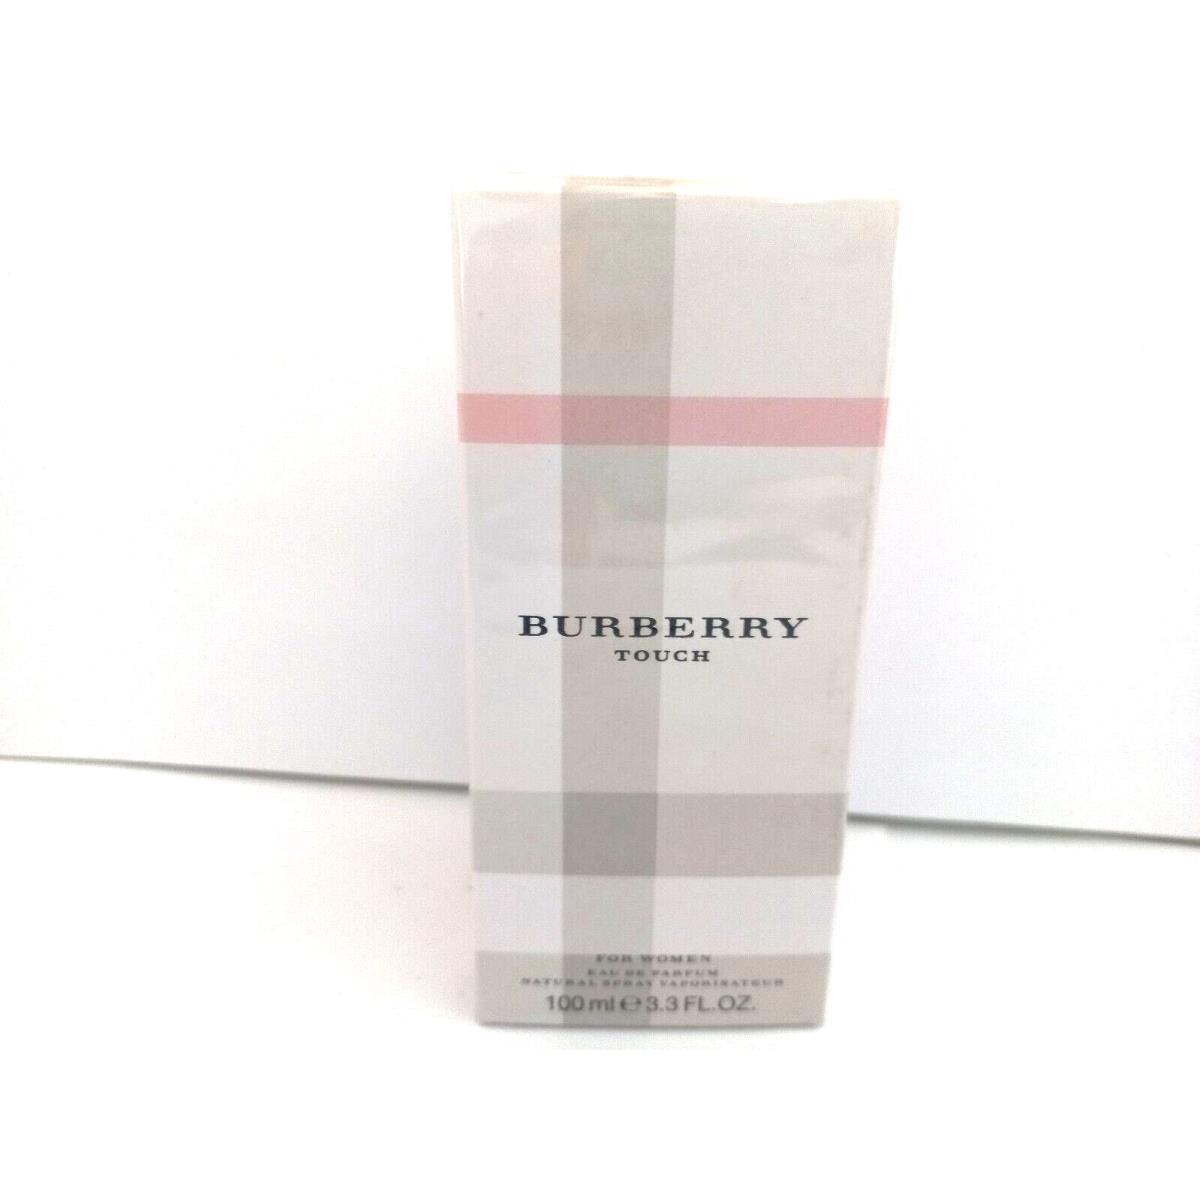 Burberry Touch For Women Eau de Parfum 3. 3 fl oz Spray | 5045294100406 ...